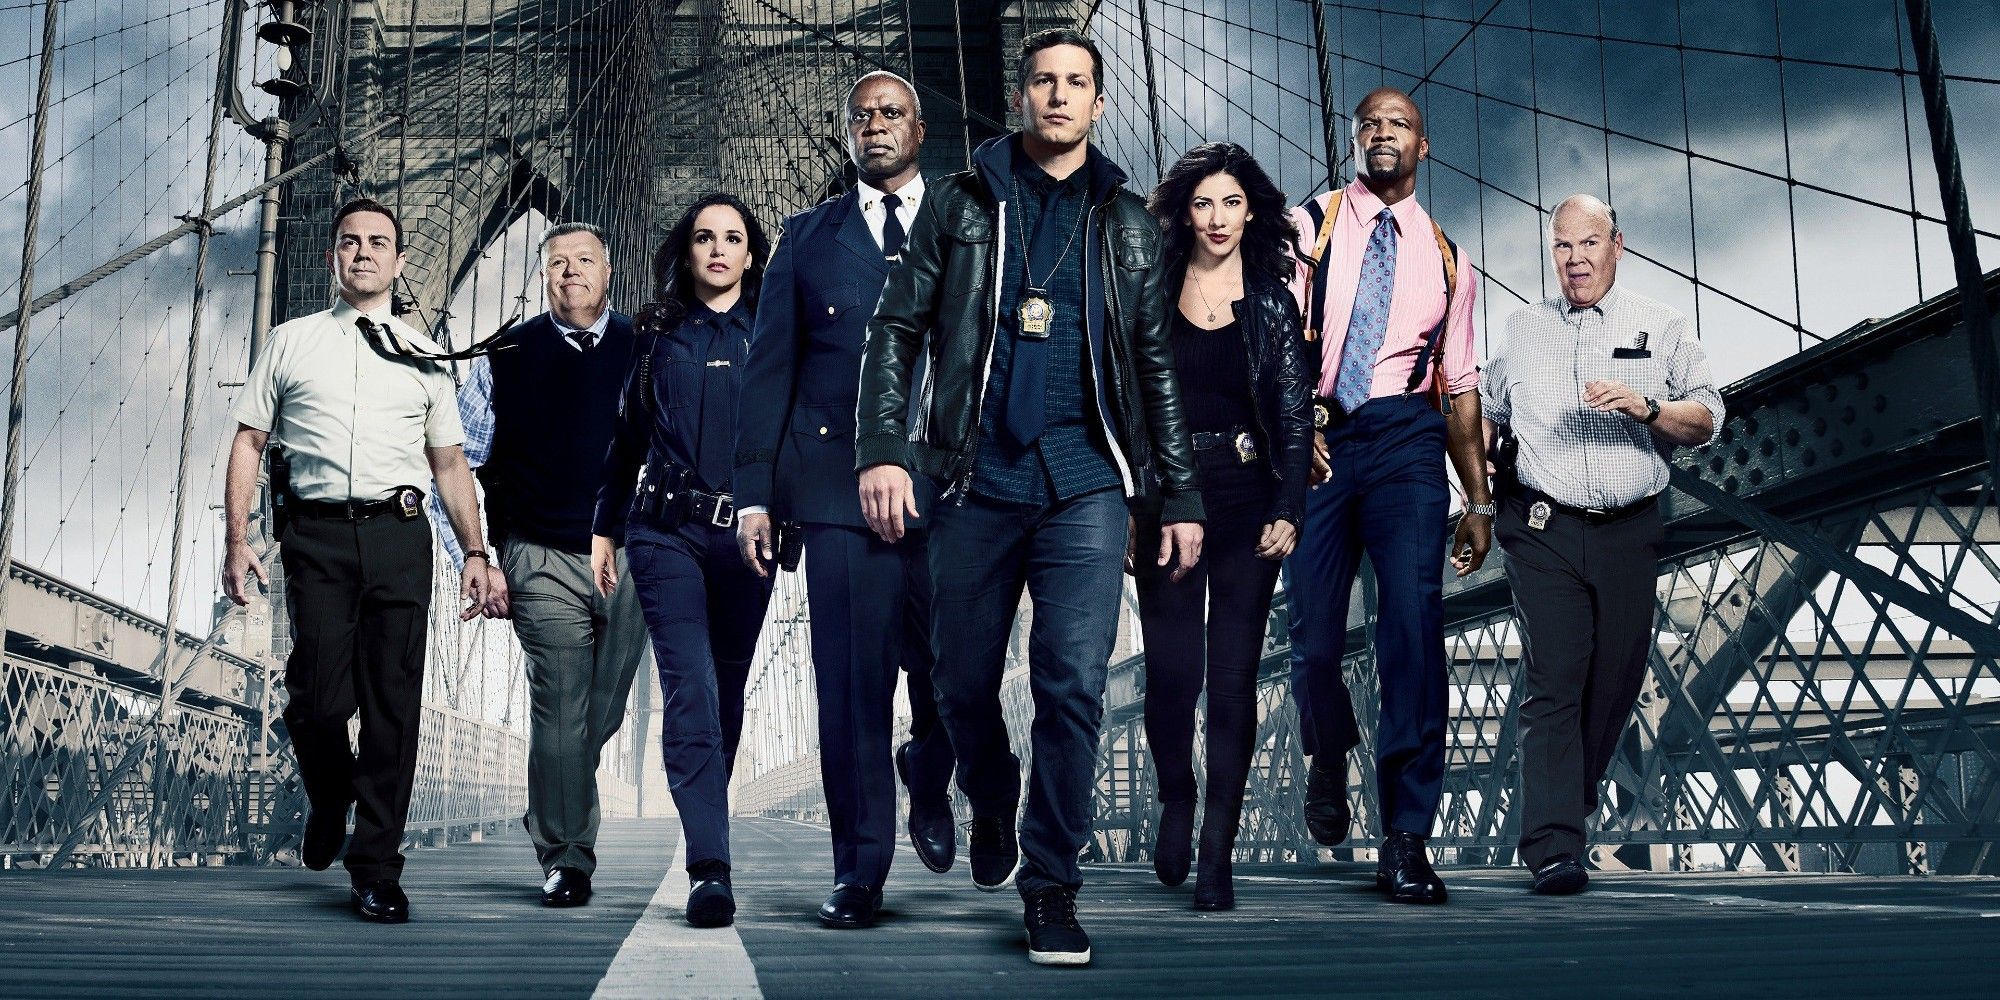 Brooklyn Nine-Nine Ending With Season 8 Is a Good Thing